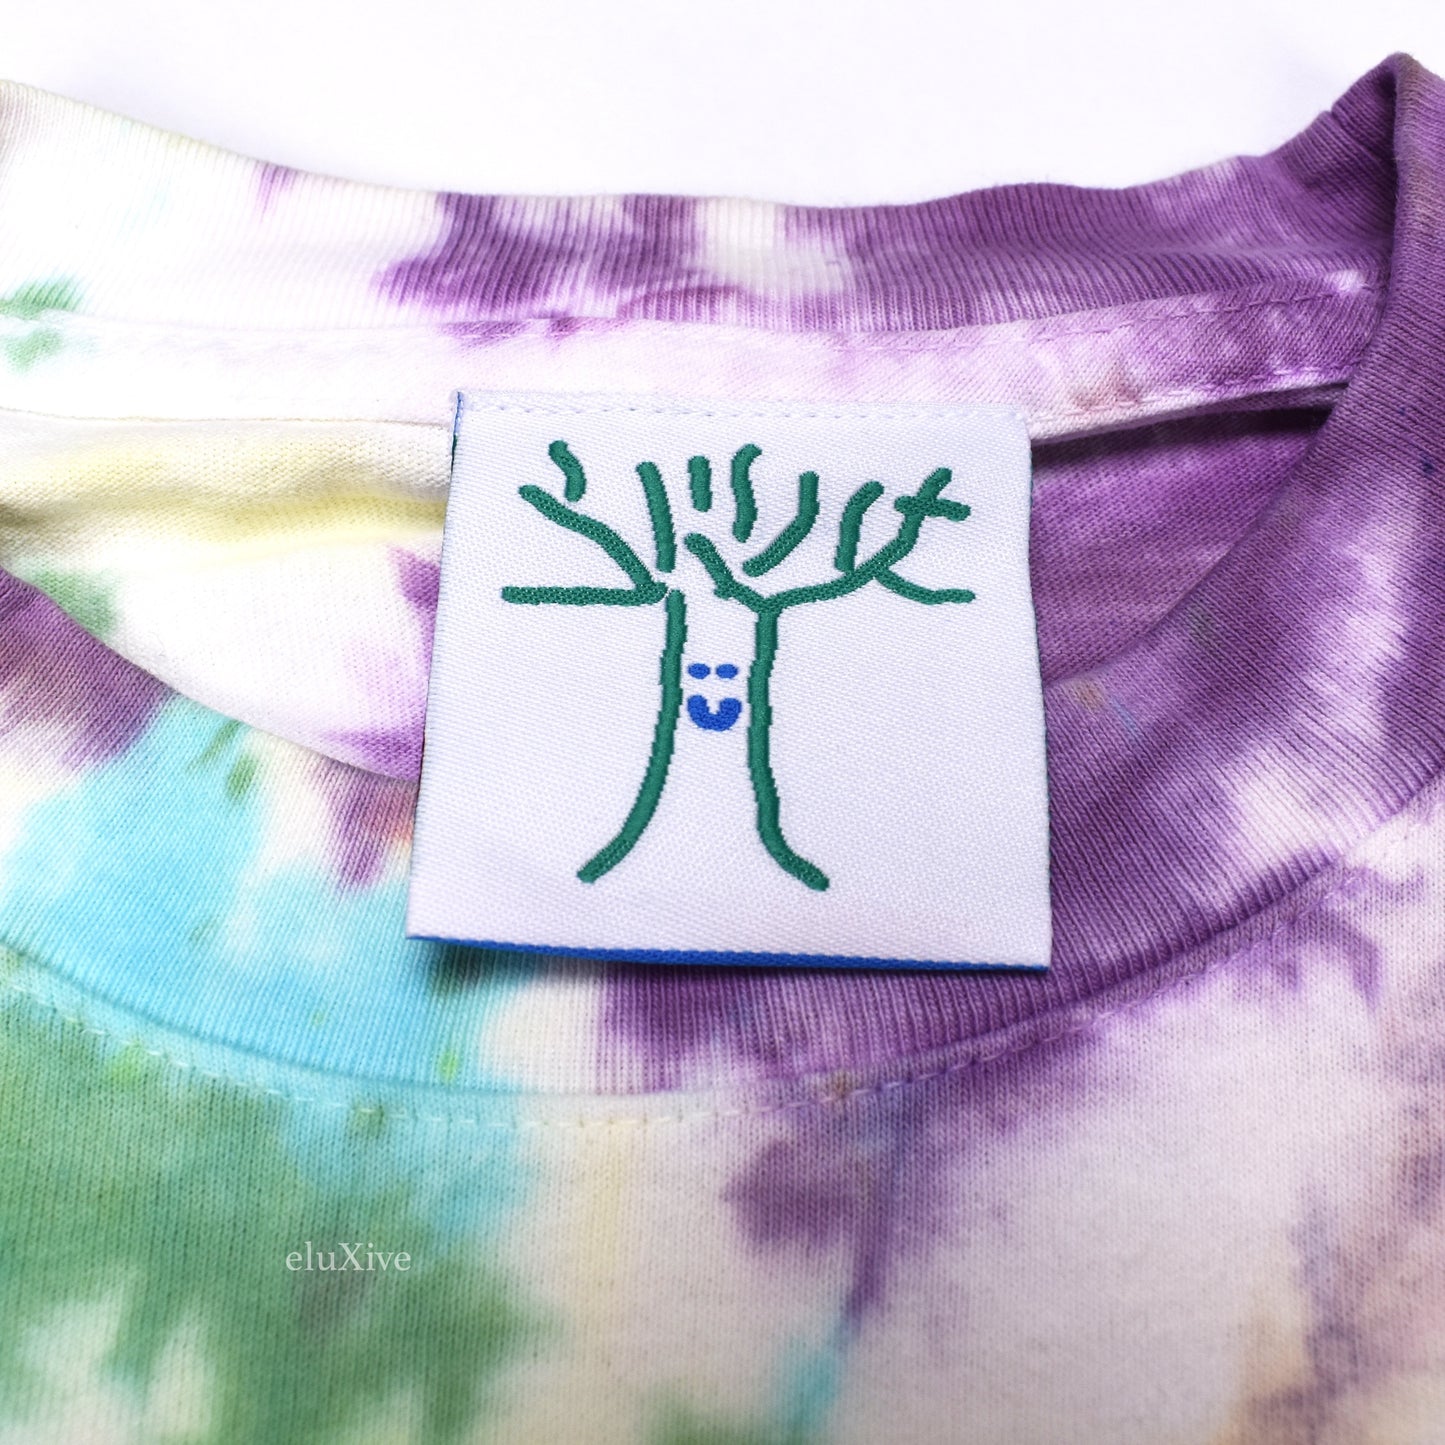 Online Ceramics - Elizabeth Gips 'Changes' Logo Tie-Dye T-Shirt